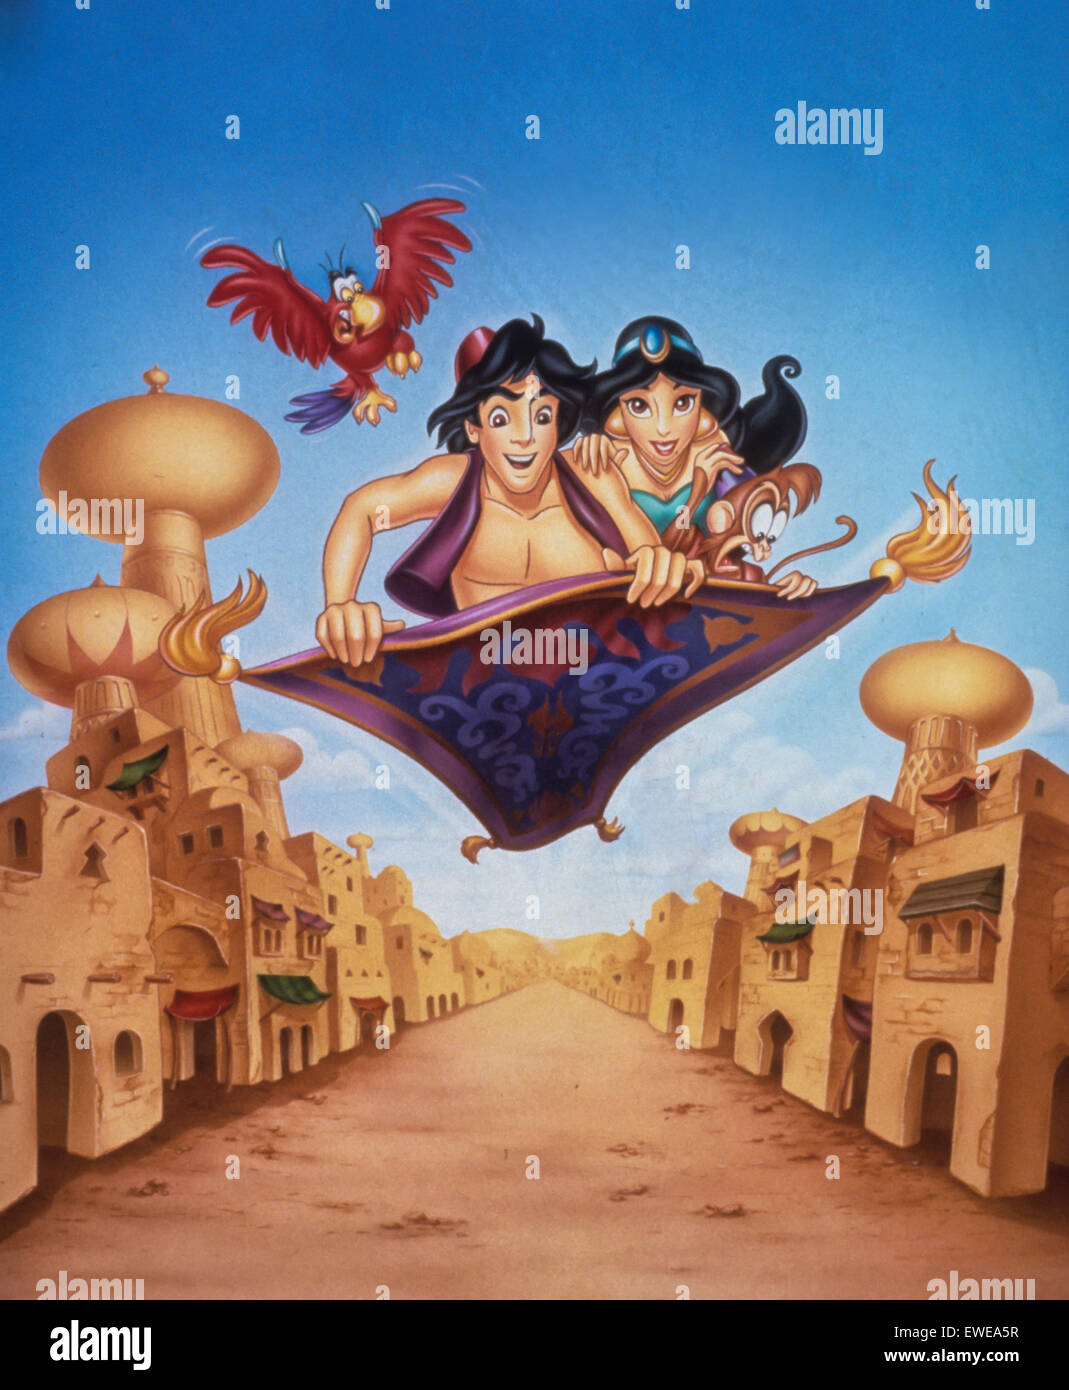 Aladdin cartoon hi-res stock photography and images - Alamy